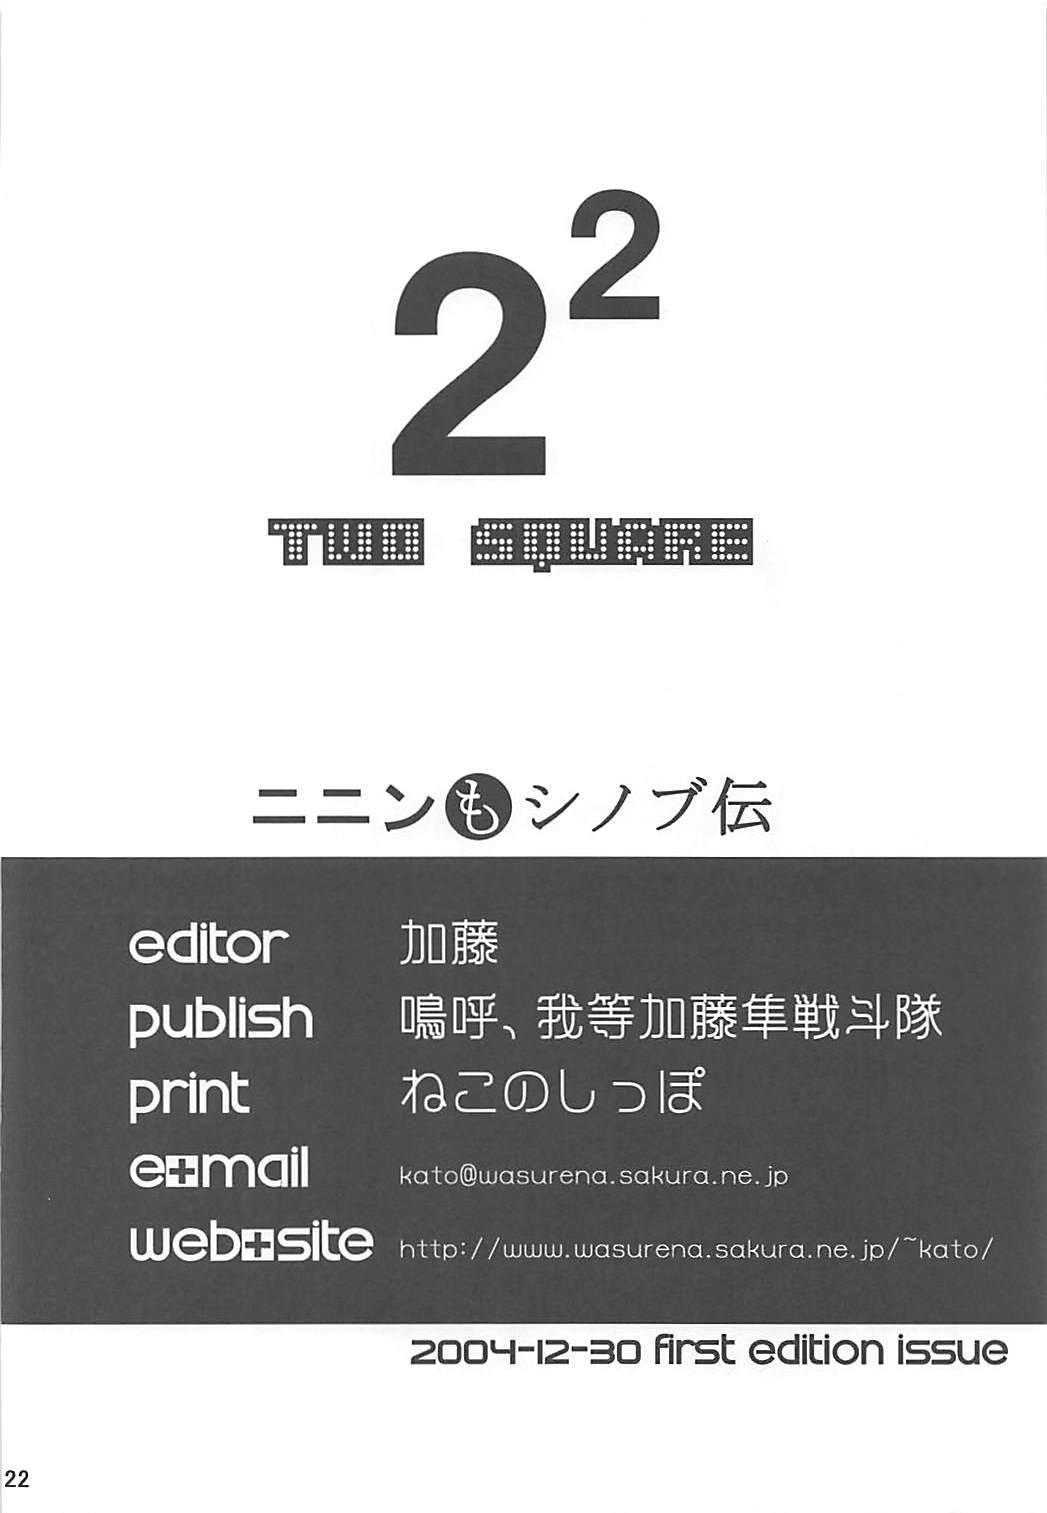 2²=Shinobuden 20